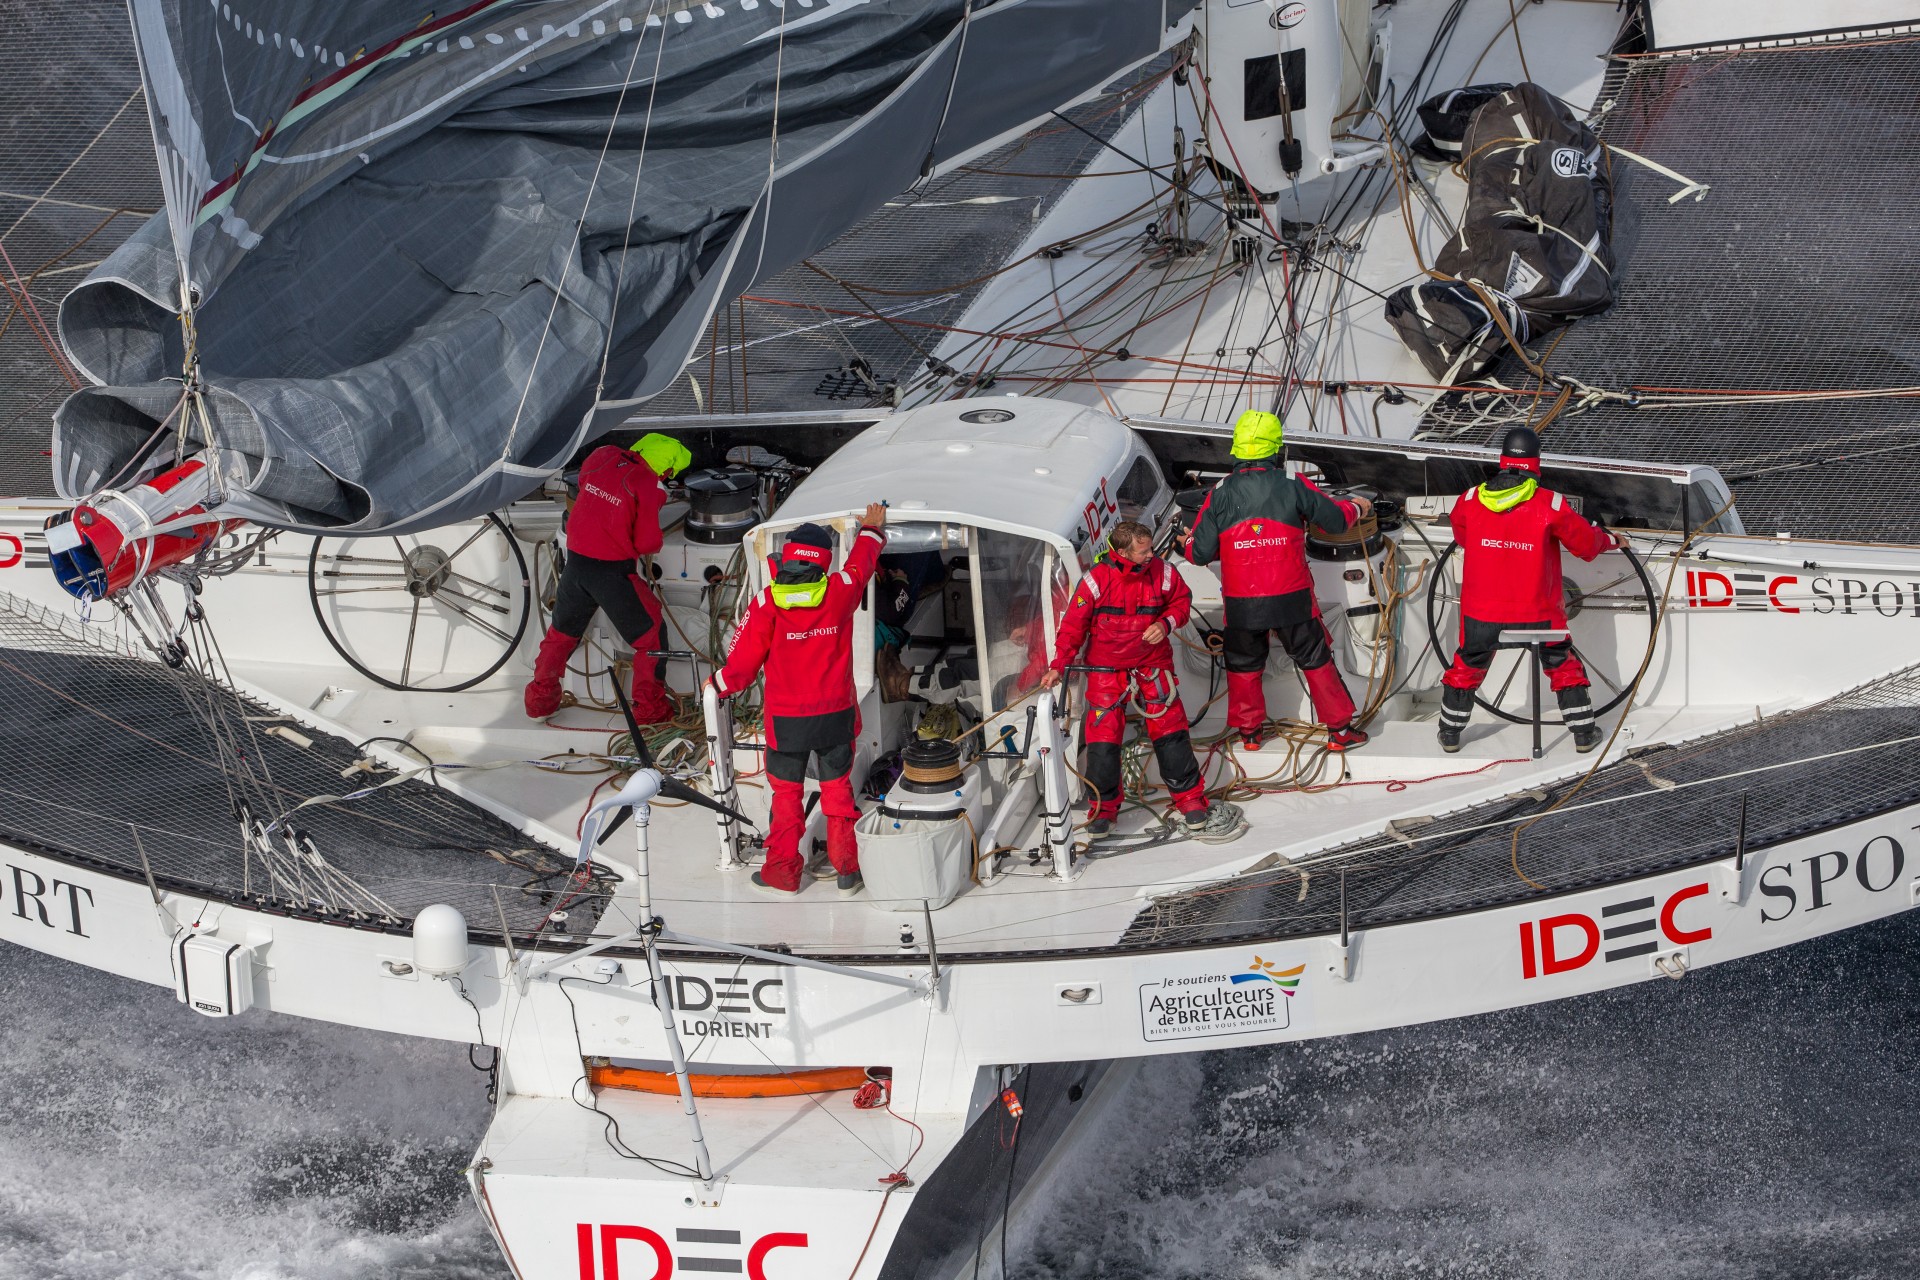  Trophee Jules Verne  Trimaran IDEC  Day 27  record at Cape Horn !